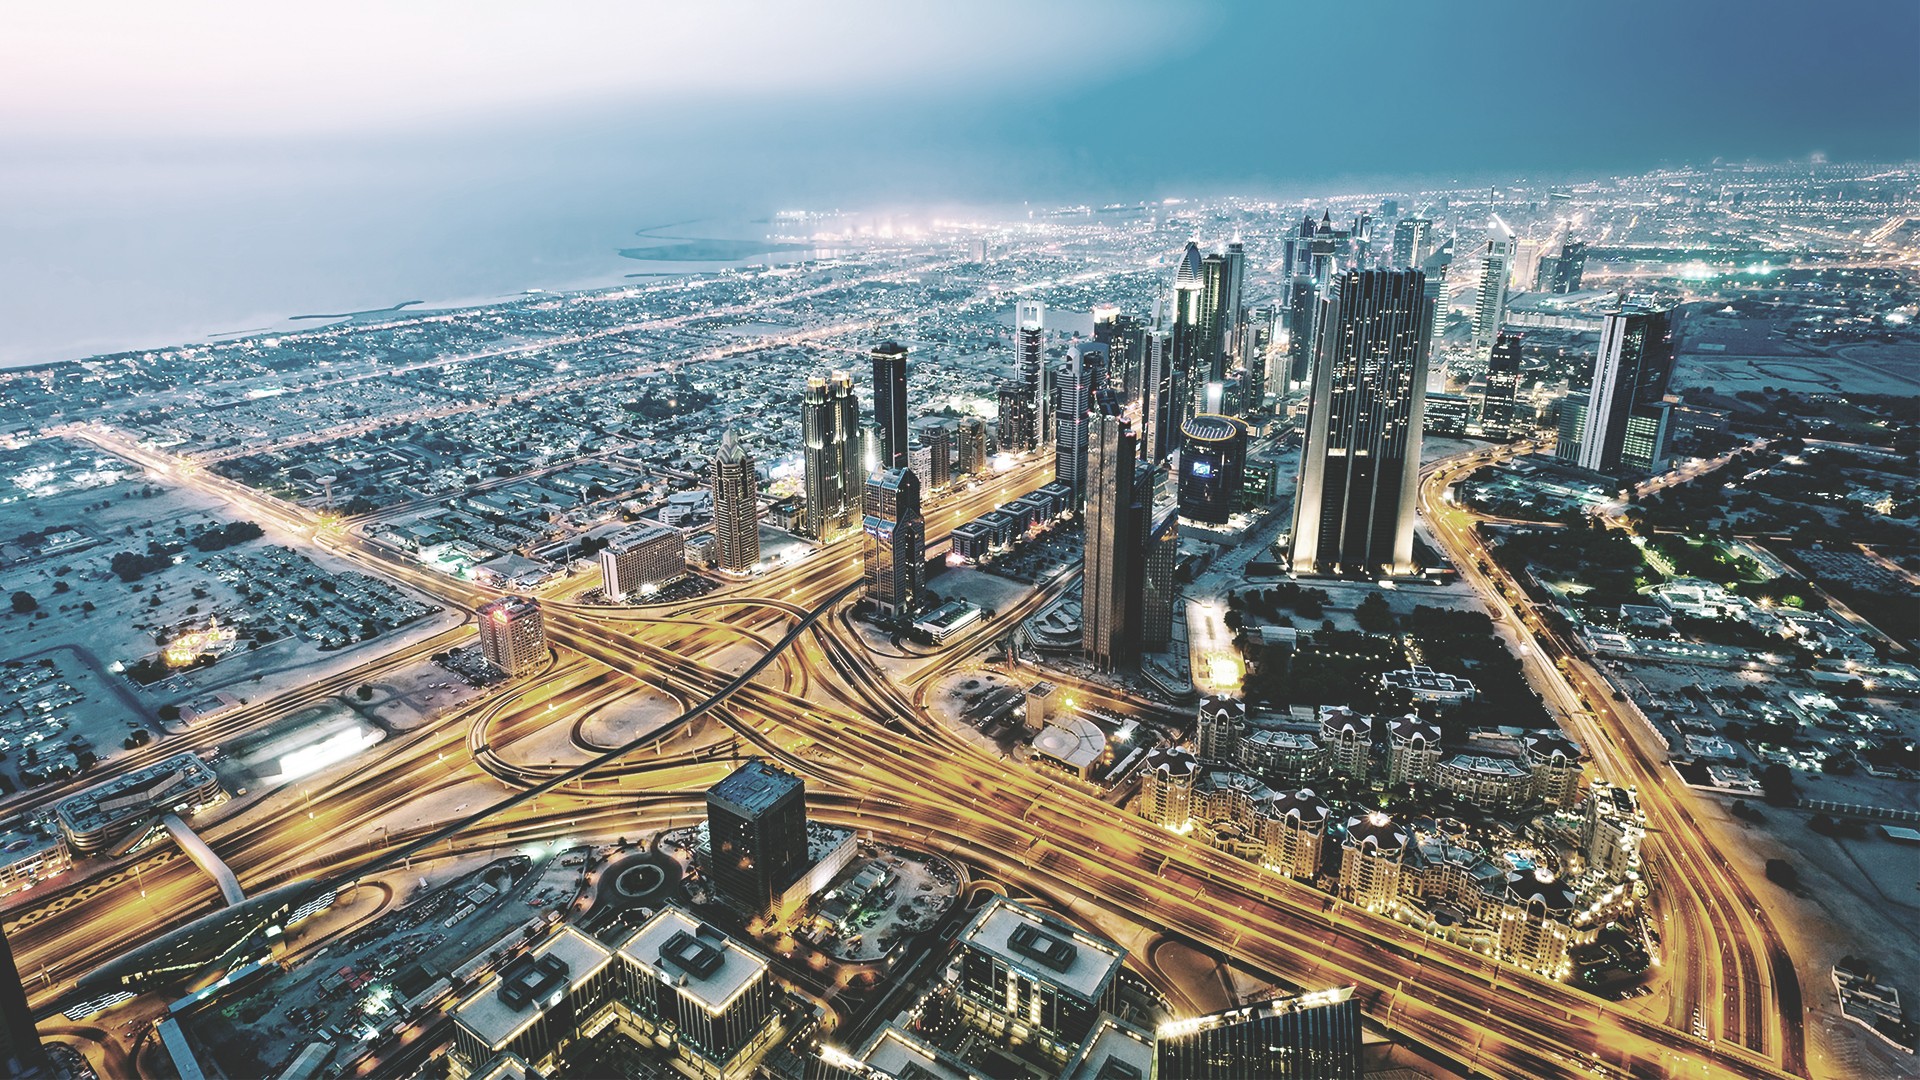 General 1920x1080 Dubai city cityscape night highway aerial view United Arab Emirates long exposure city lights